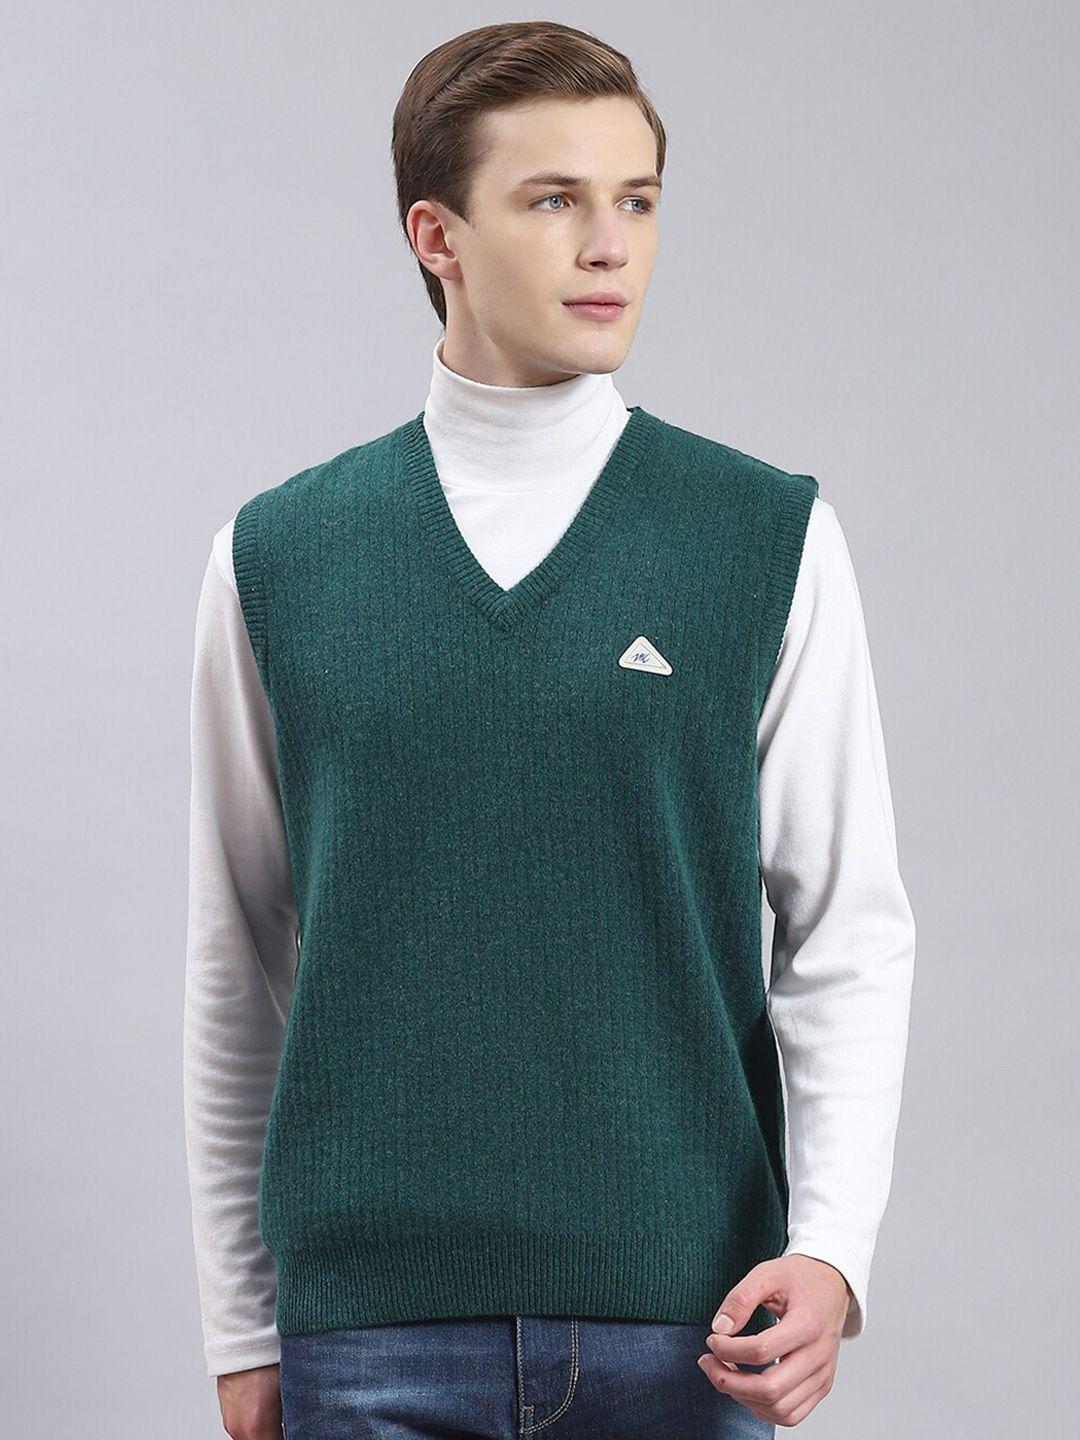 monte carlo striped v-neck sleeveless woollen sweater vest